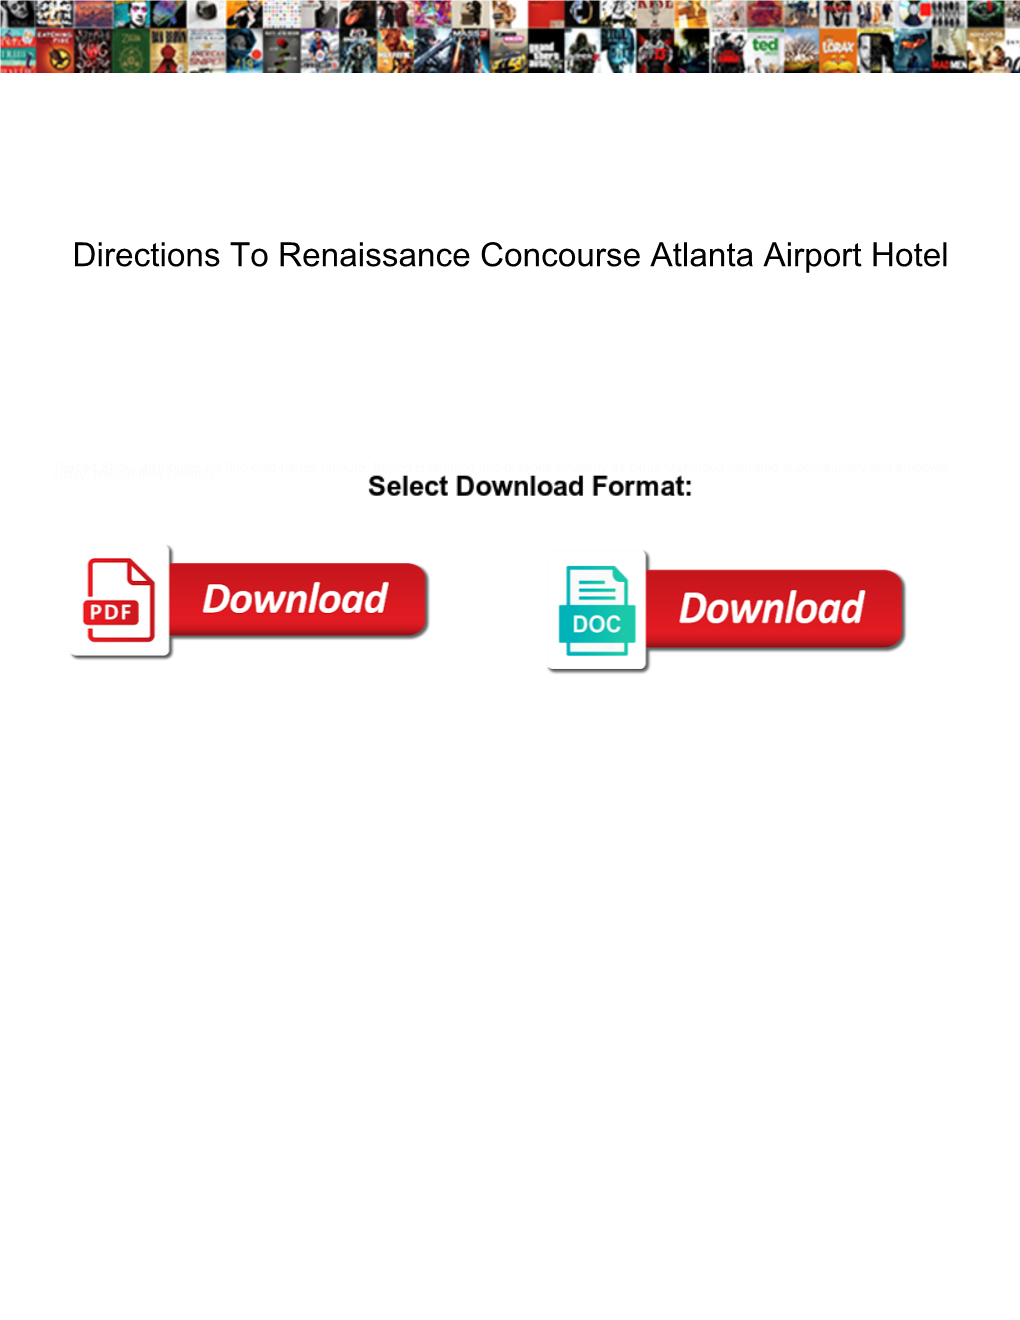 Directions to Renaissance Concourse Atlanta Airport Hotel